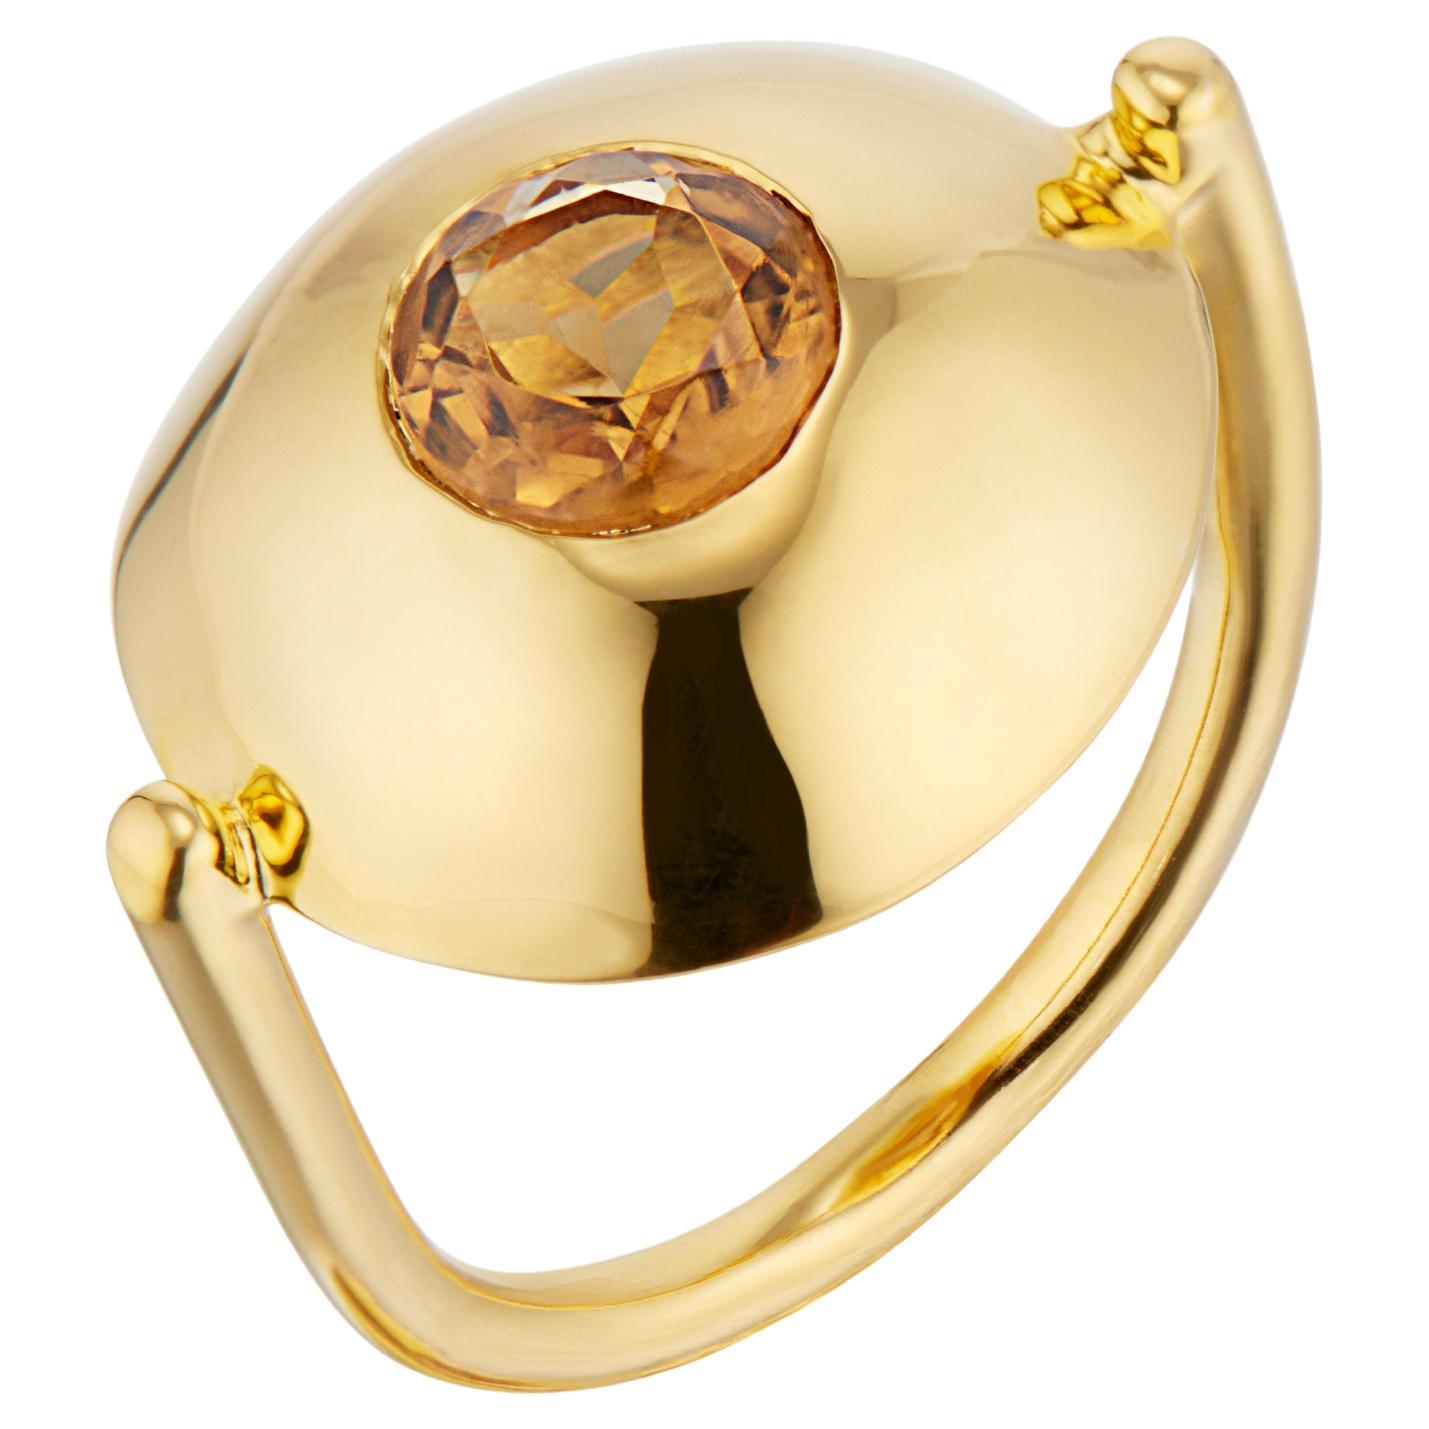 22 Karat Gold Vermeil Orbit Ring with Yellow Citrine by Chee Lee New York